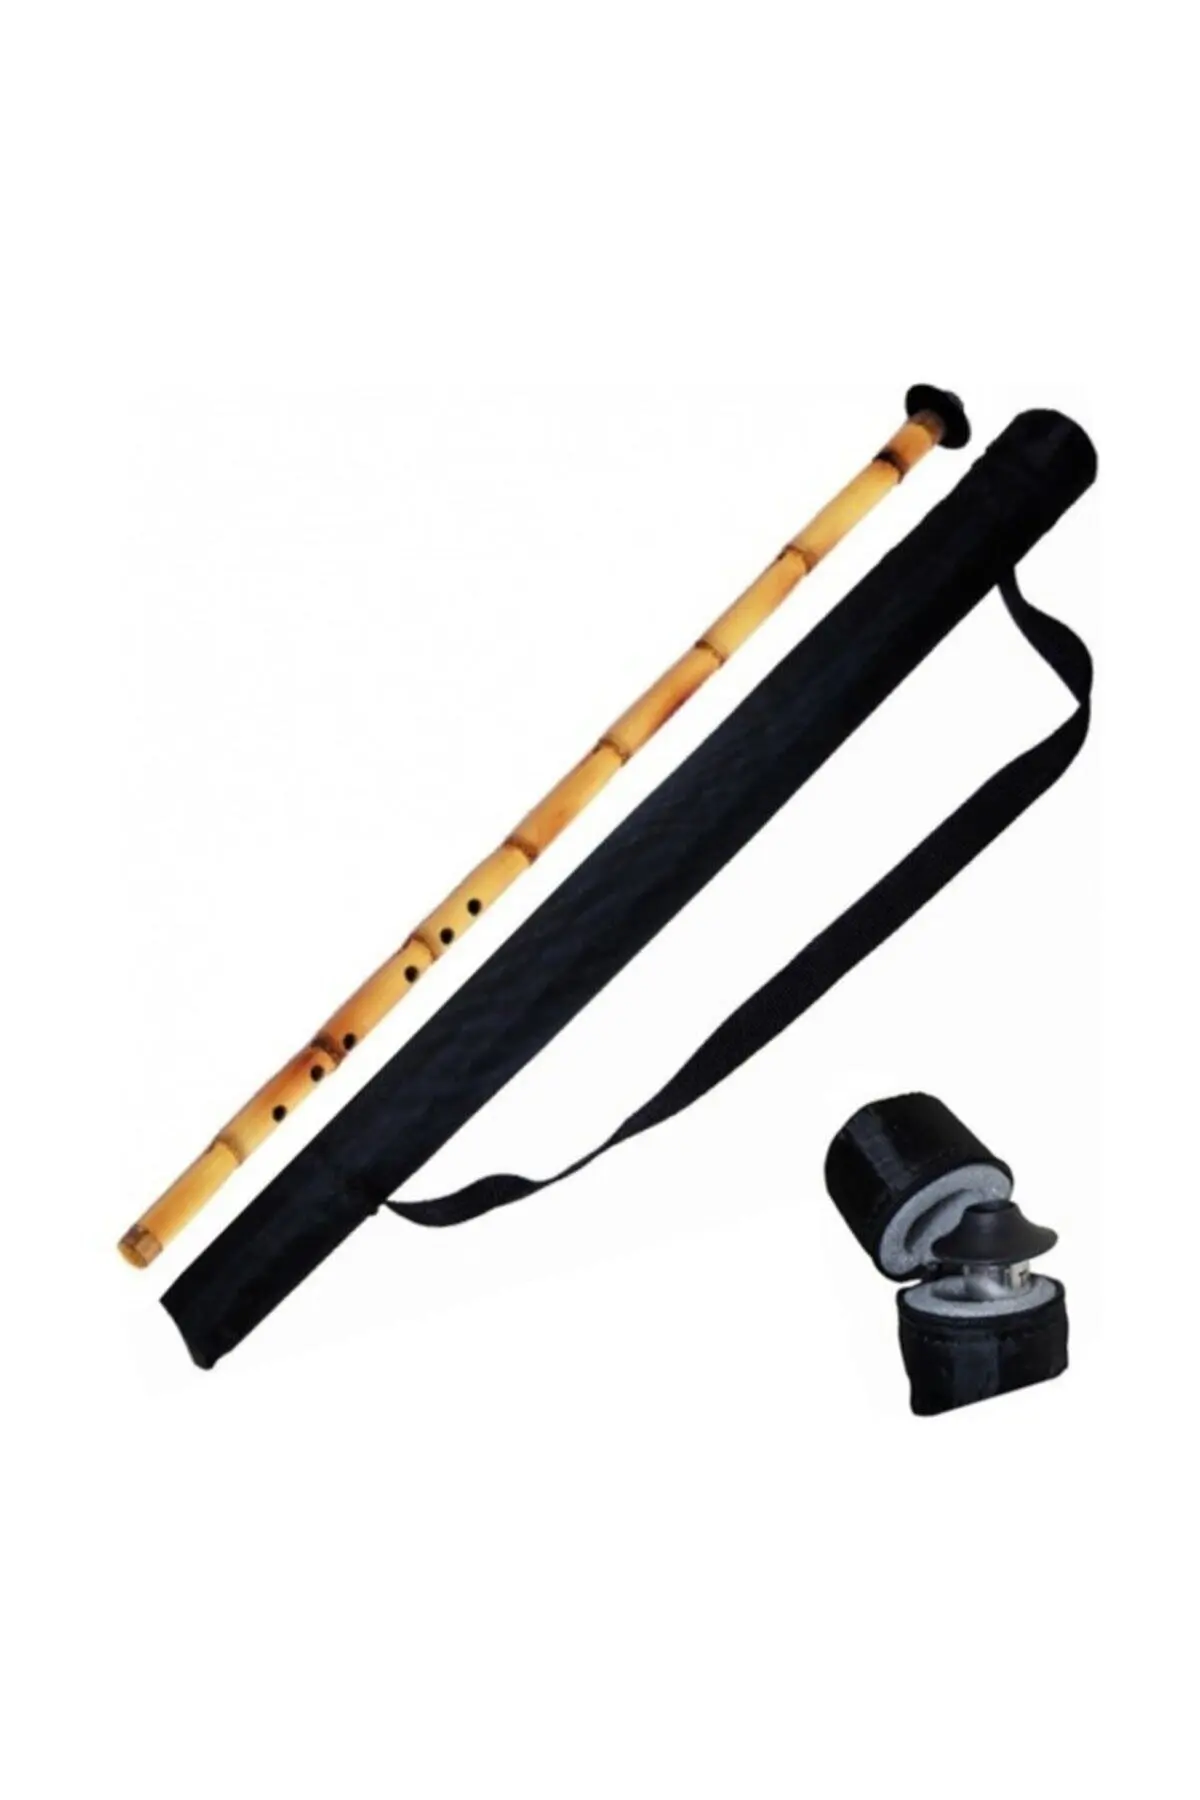 

Sufi Music Genuine Samandag Bamboo Reed Turkish Ney Nay Flute | Turkish Woodwind Handmade (B) Si Kiz Ney Instrument + Hard Case